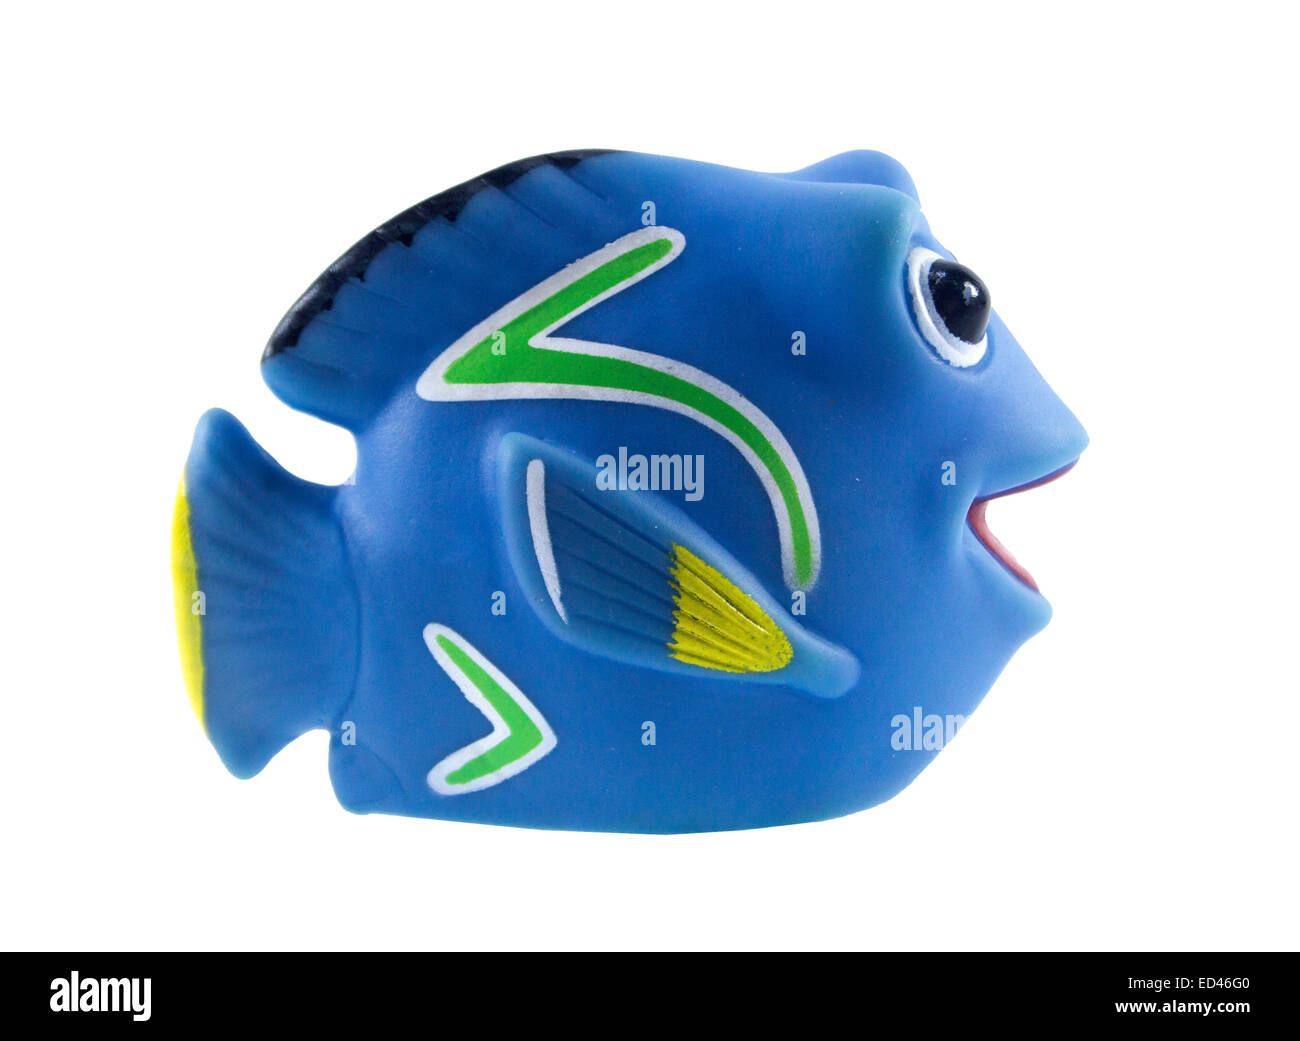 Amman, Jordan - November  1, 2014: Marlin cartoon fish toy character of Finding Nemo movie from Disney Pixar animation studio. Stock Photo